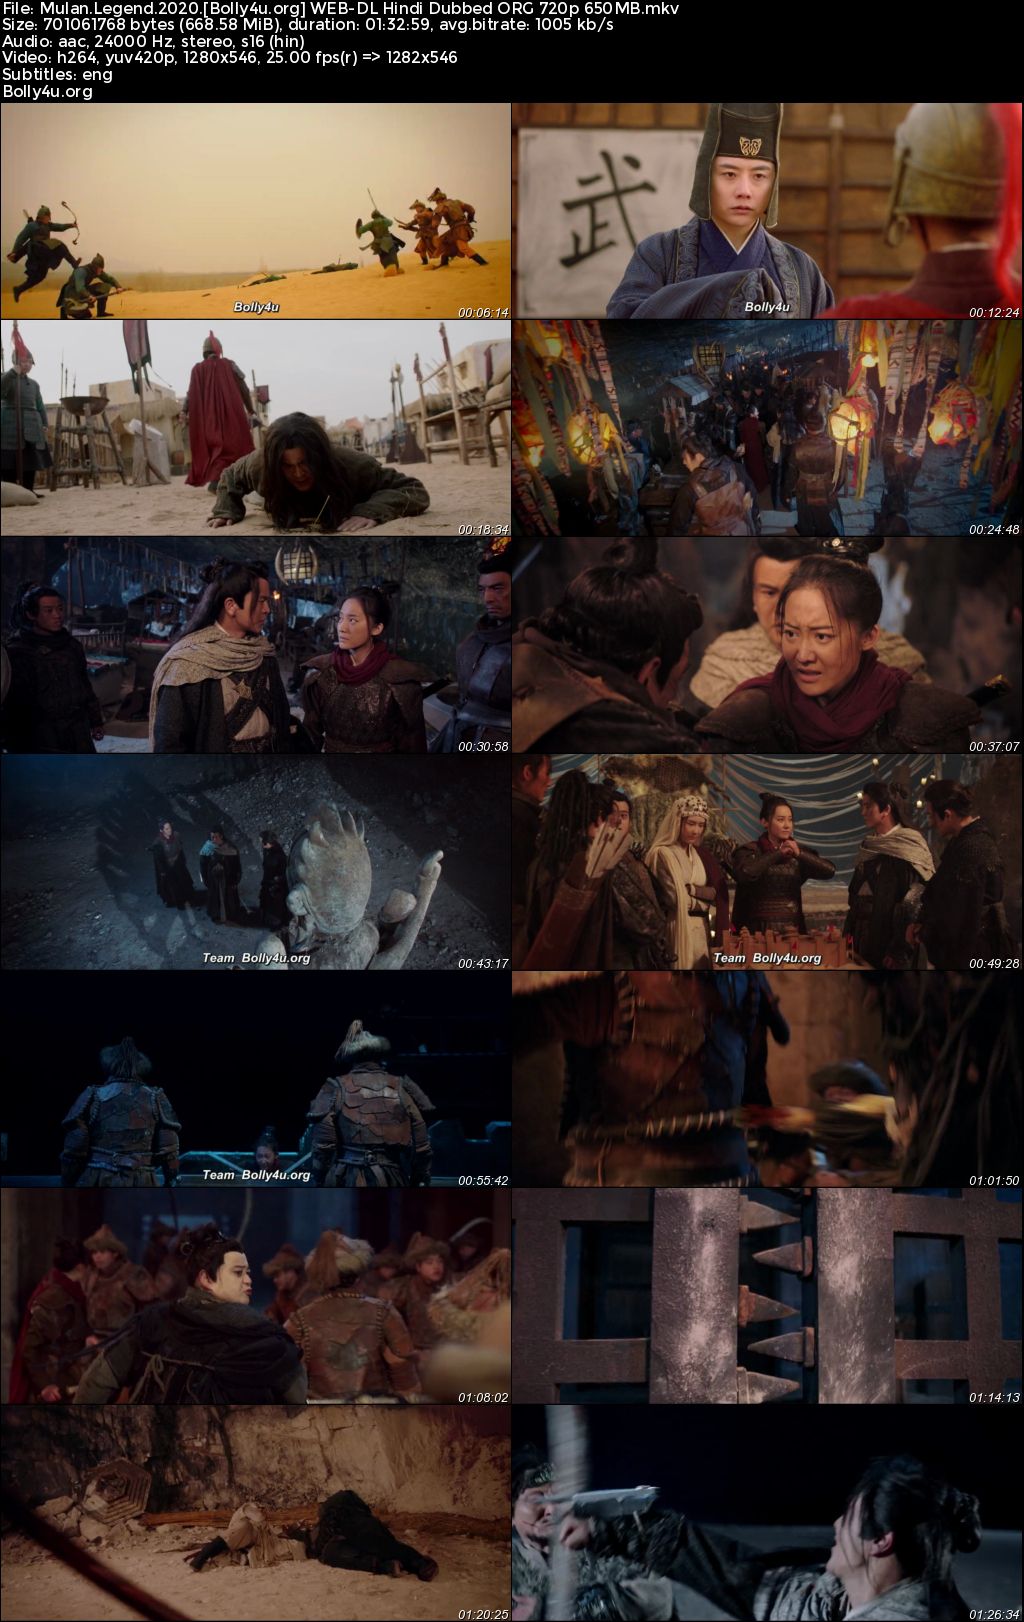 Mulan Legend 2020 WEB-DL Hindi Dubbed ORG Full Movie Download 1080p 720p 480p